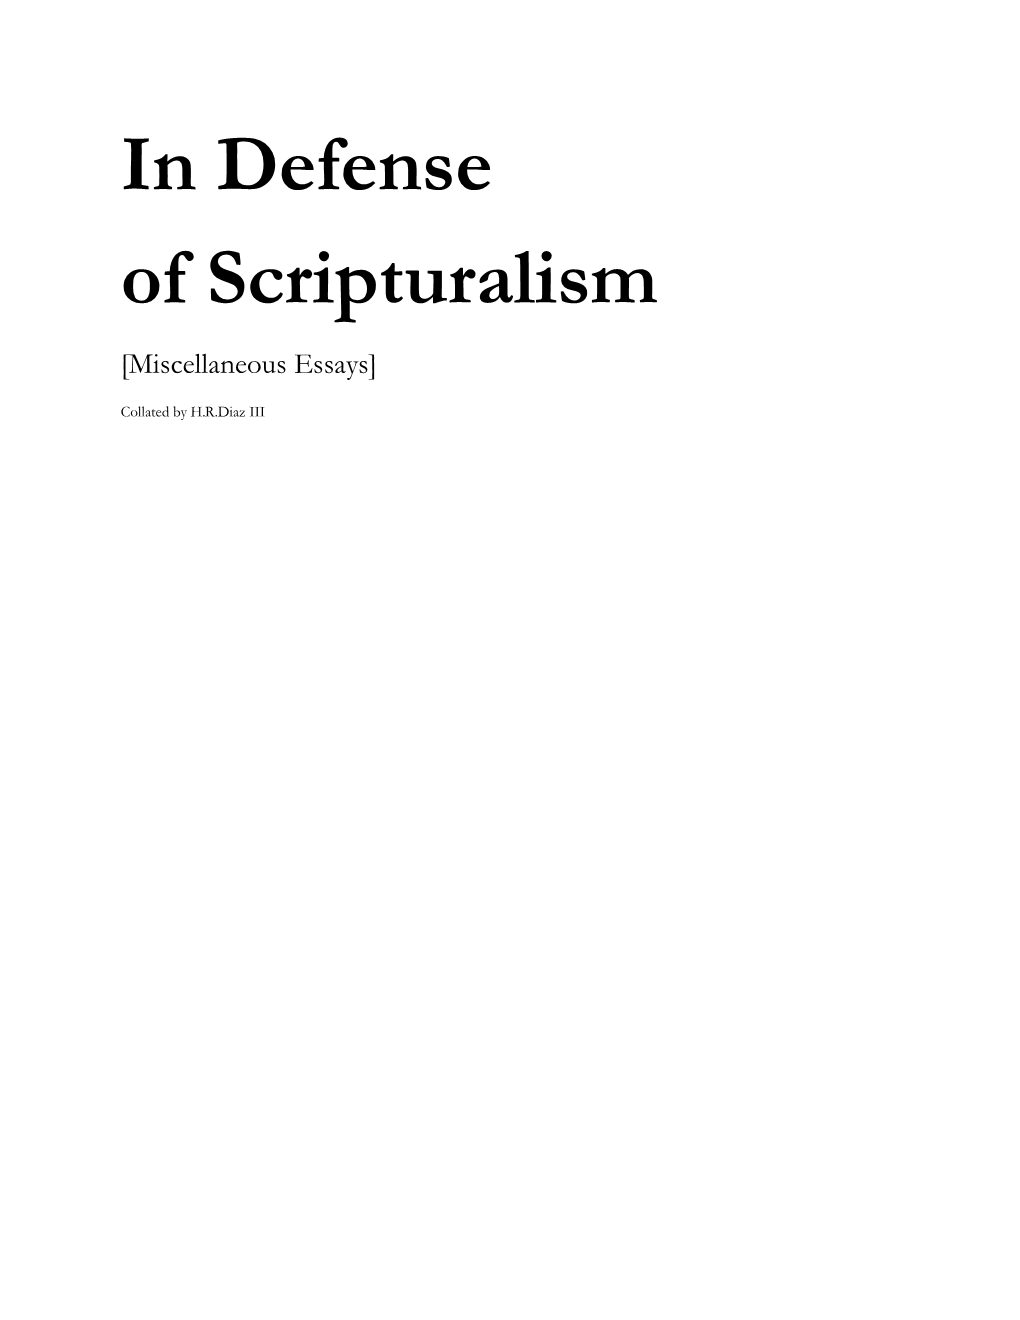 In Defense of Scripturalism [Miscellaneous Essays]